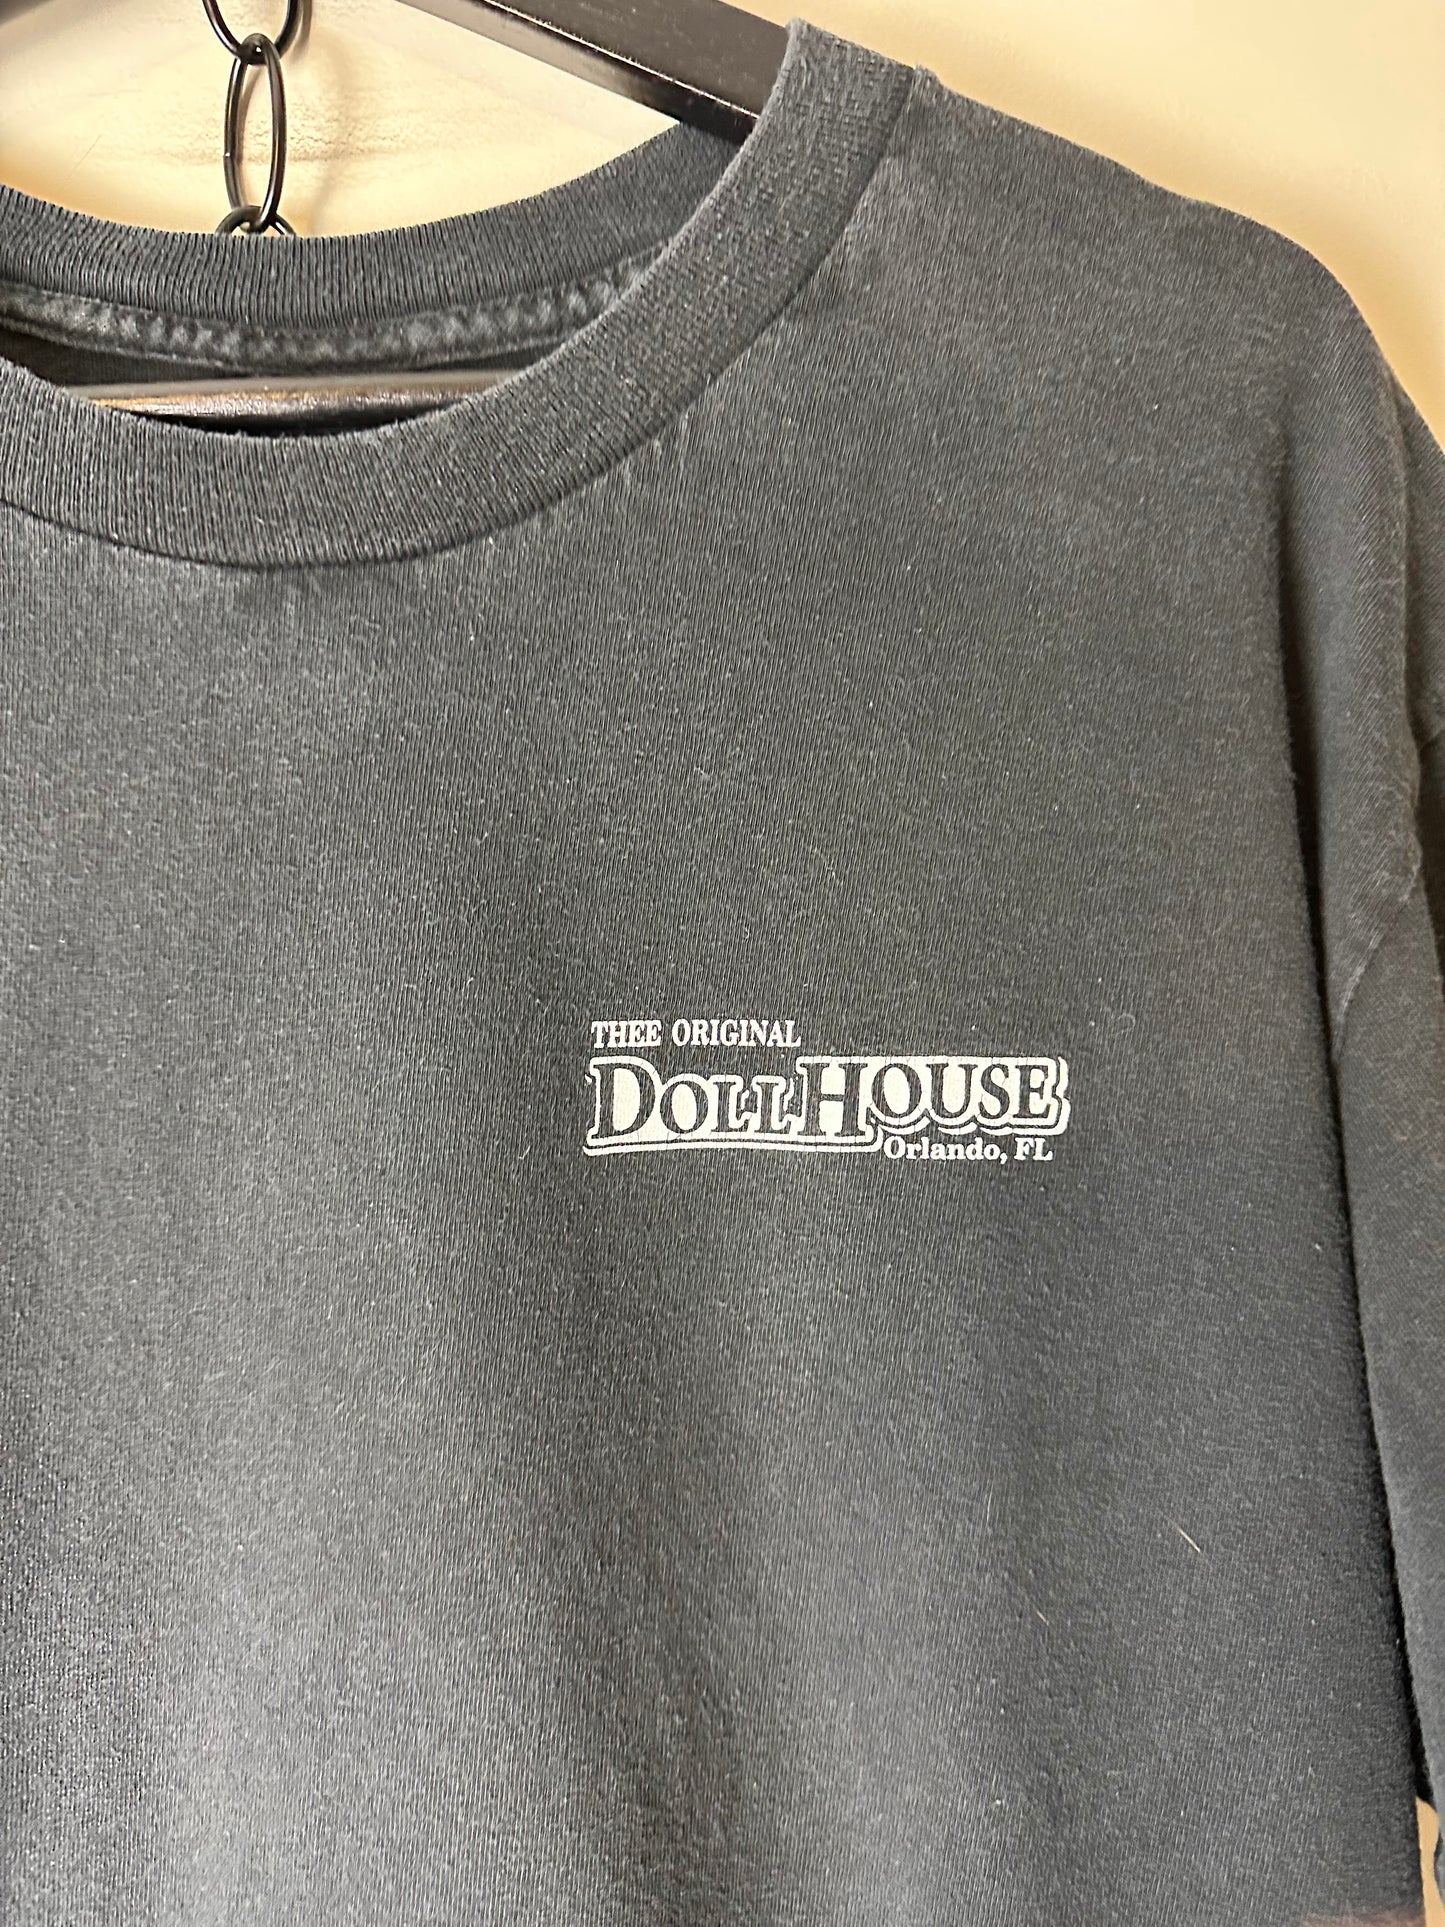 Vintage The Original Dollhouse The Supreme Team T-shirt - L